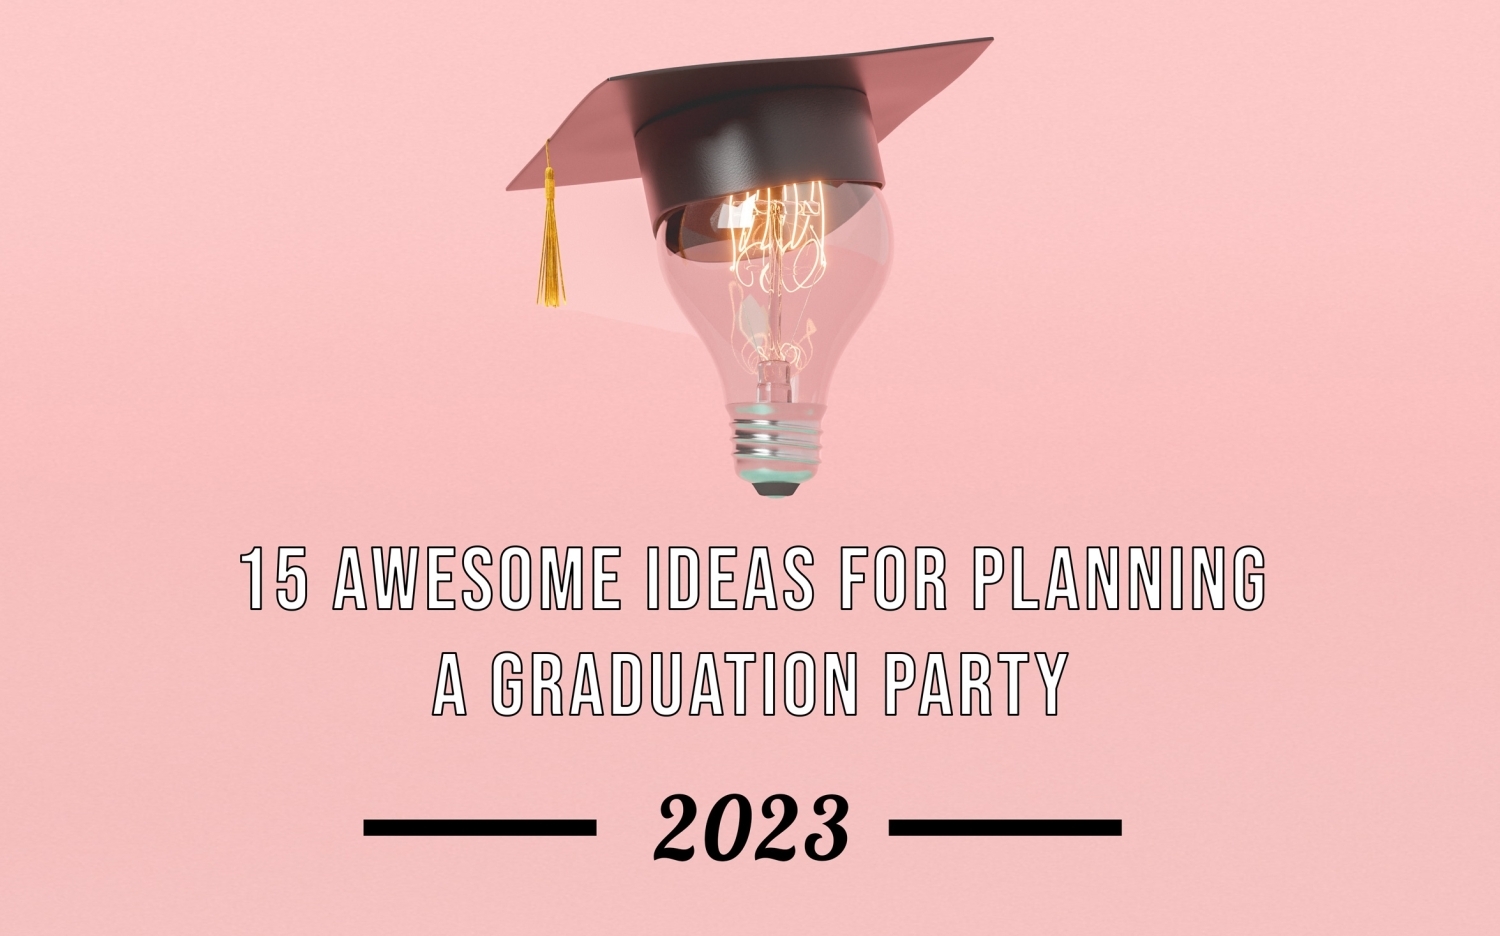 Graduation party ideas